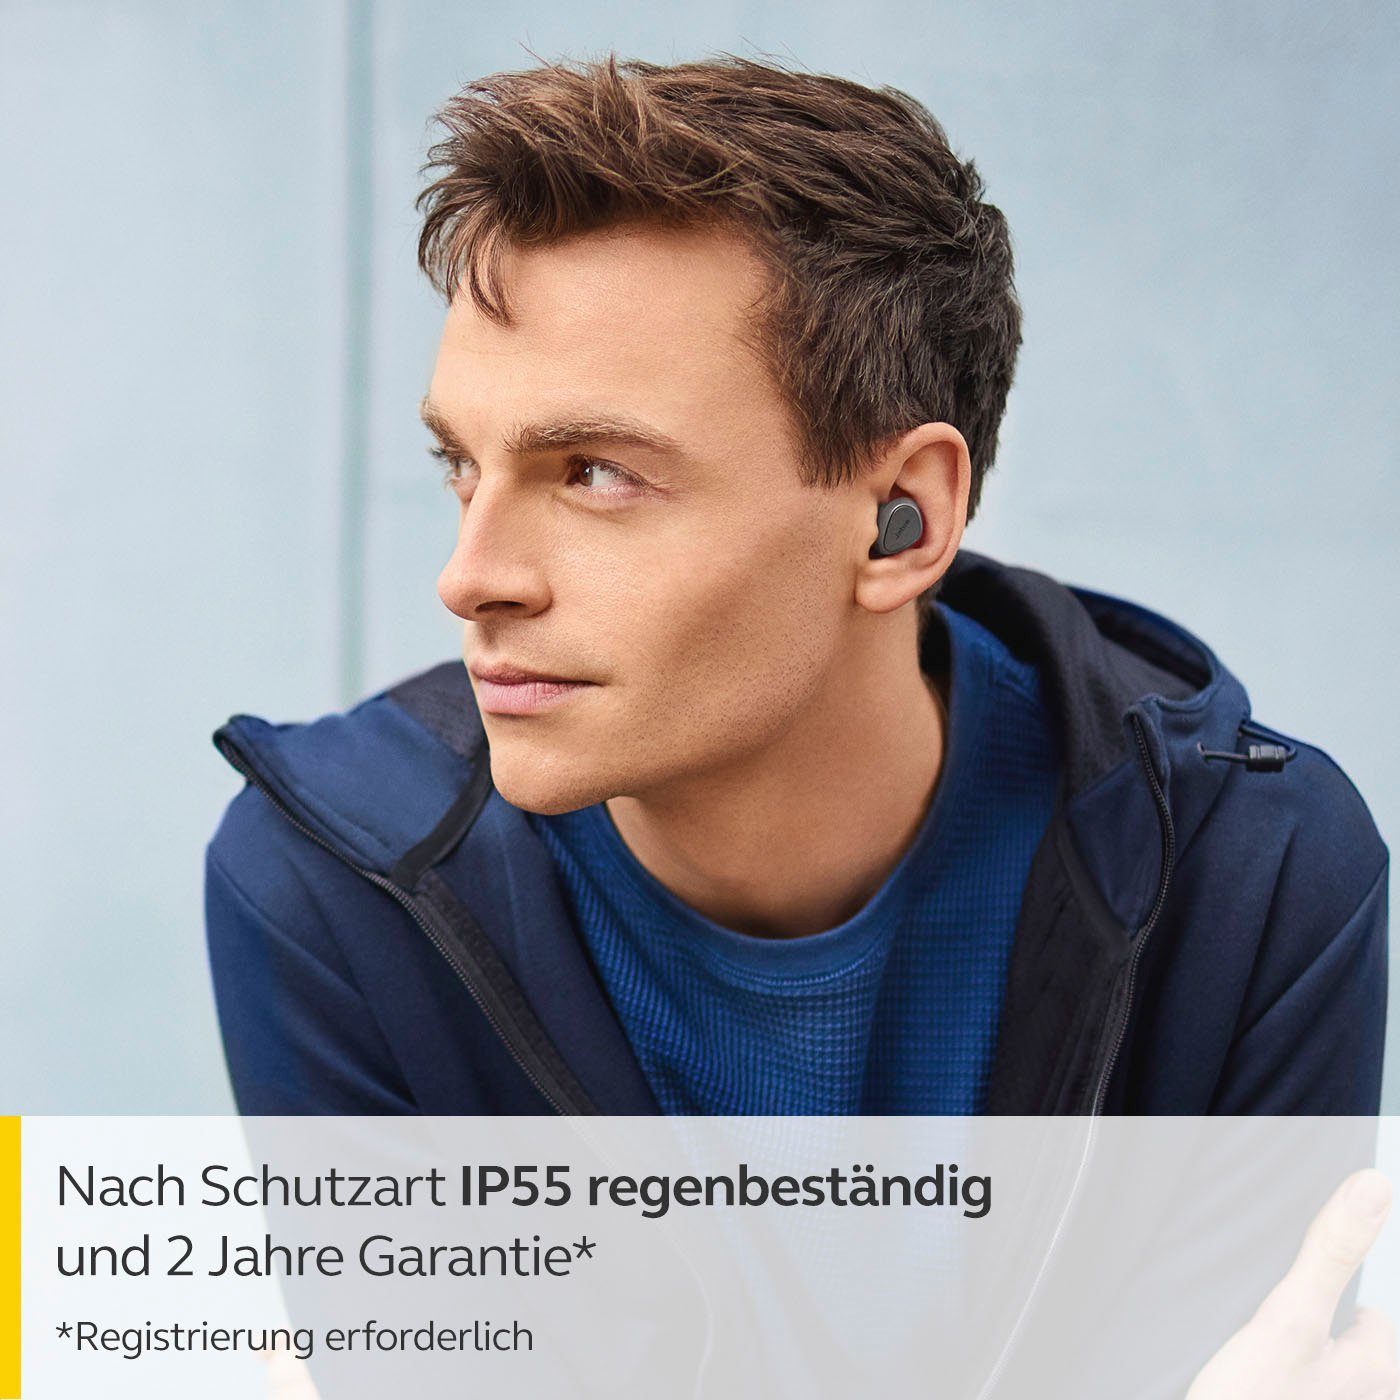 Jabra Elite dunkelgrau Assistant, In-Ear-Kopfhörer (Geräuschisolierung, 3 Siri, Google Alexa, Bluetooth)